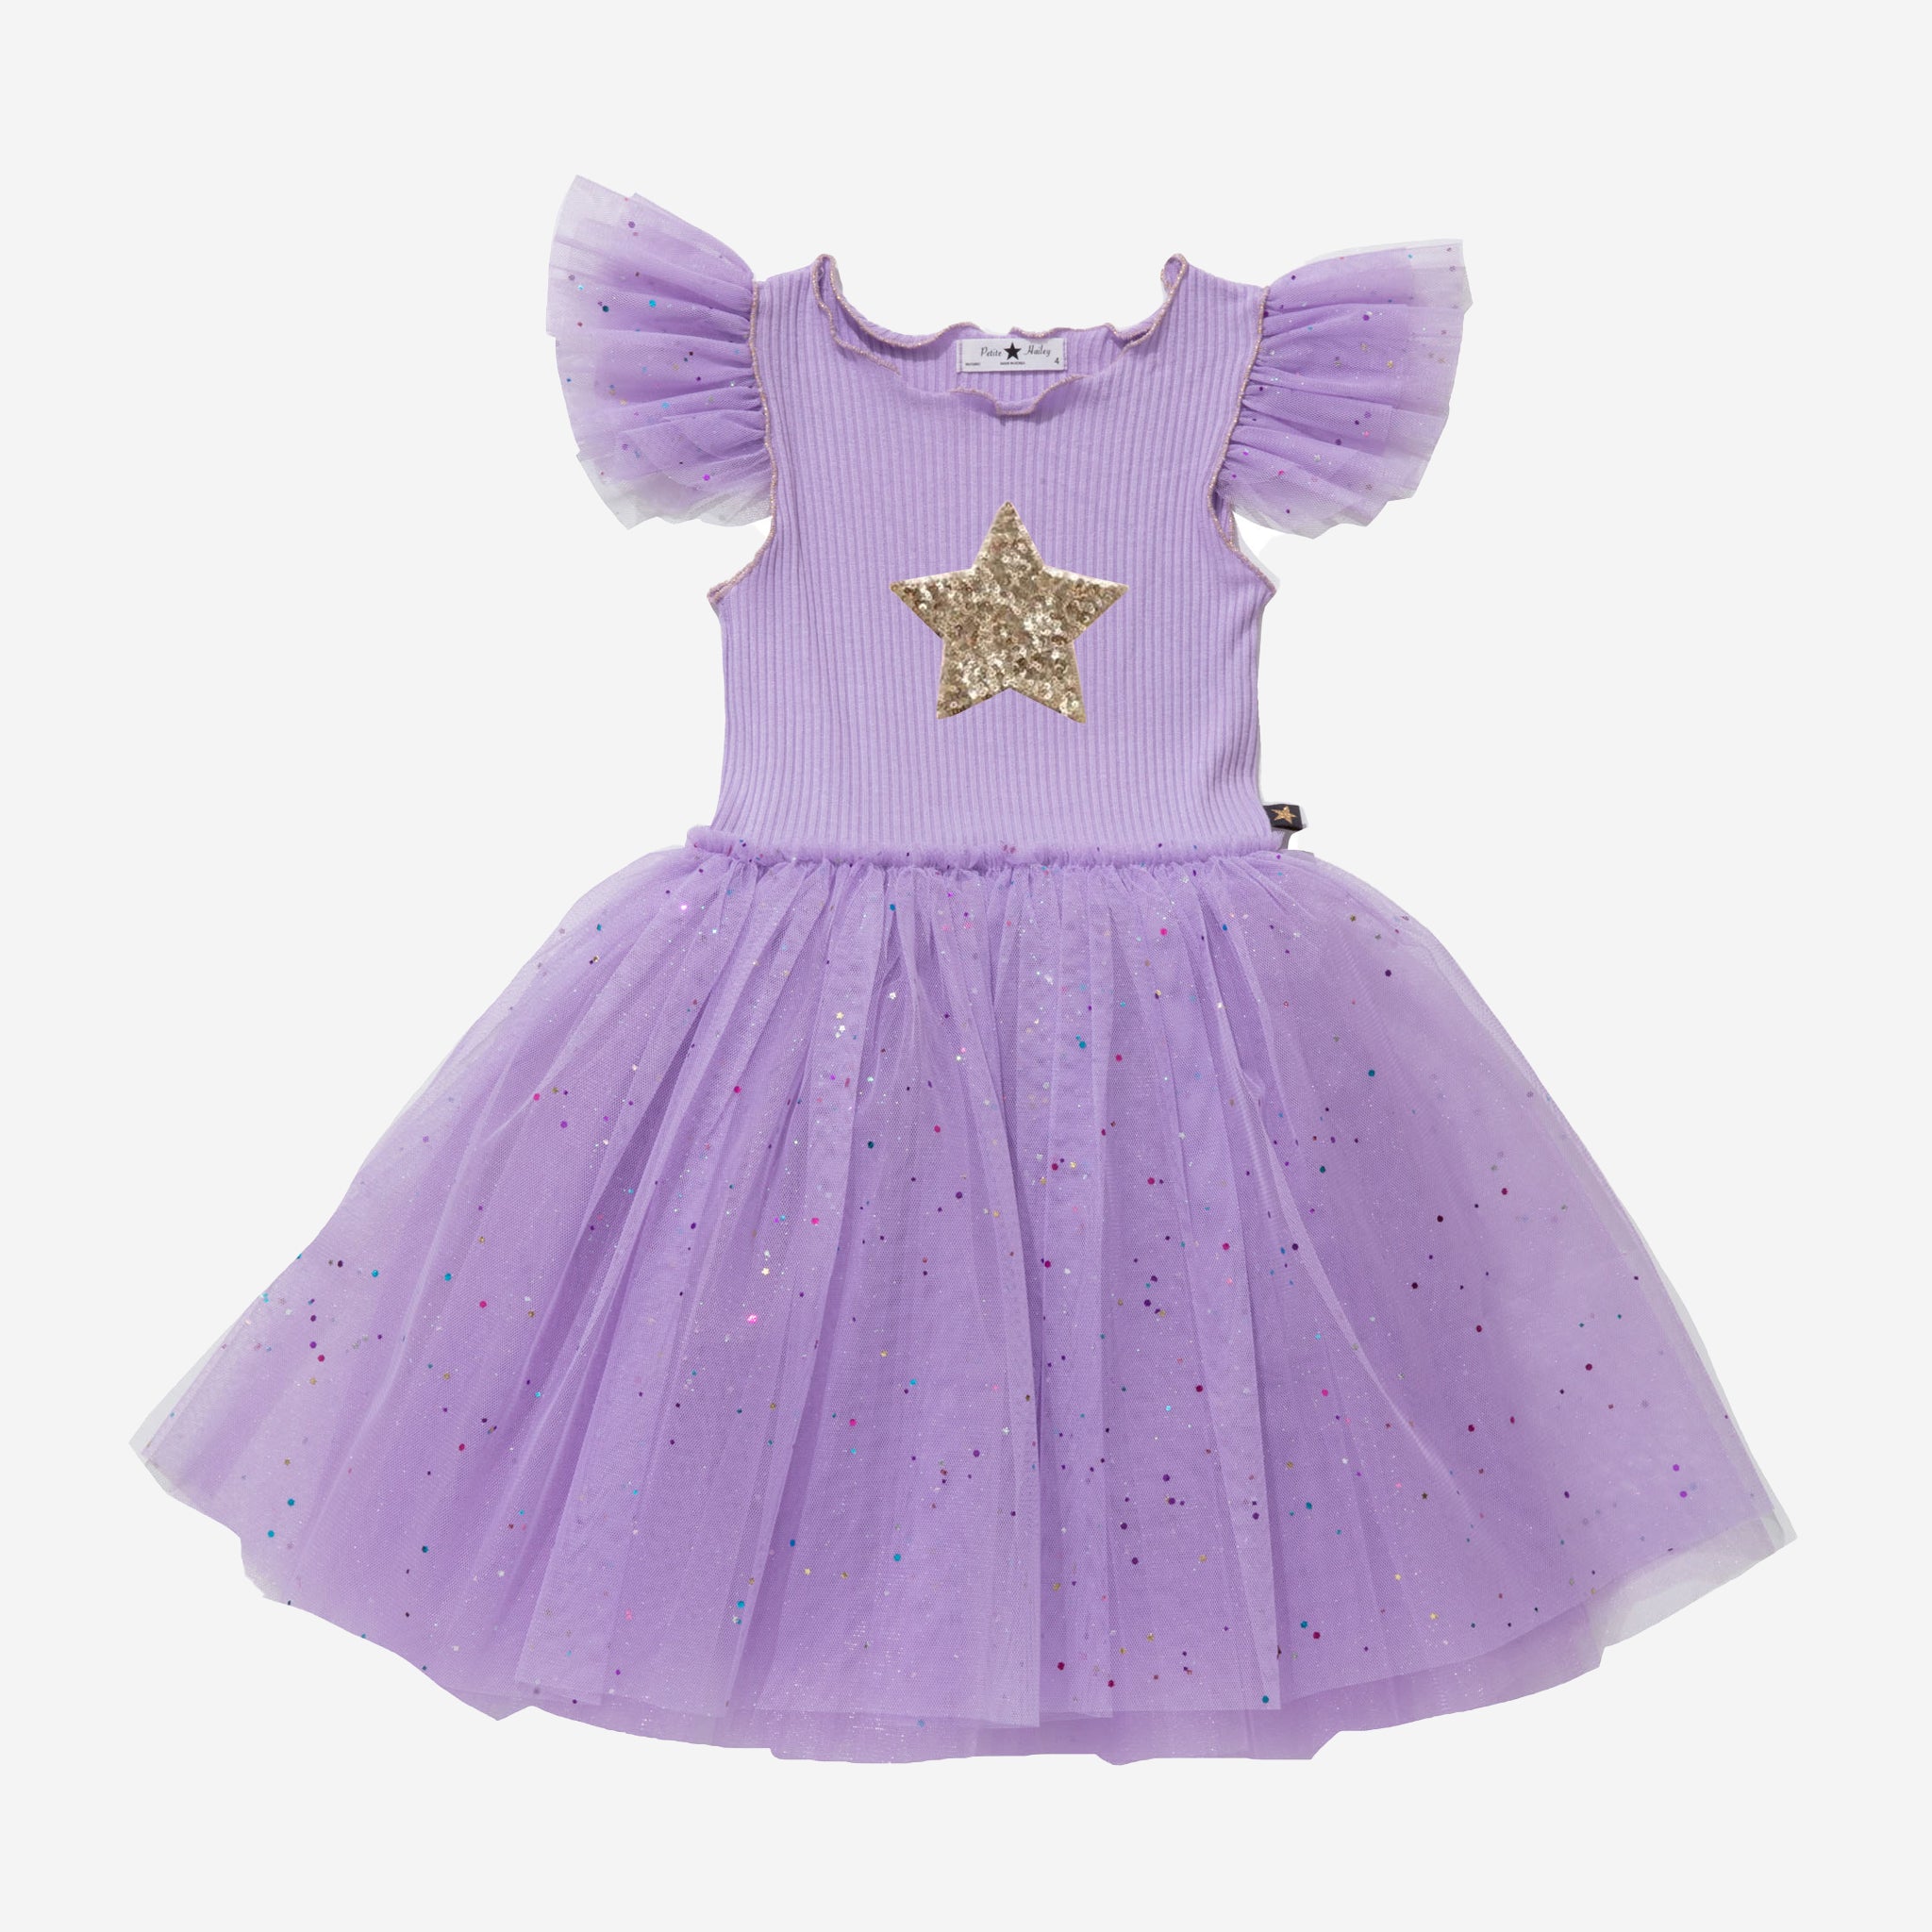 purple sparkle tutu dress with gold star 